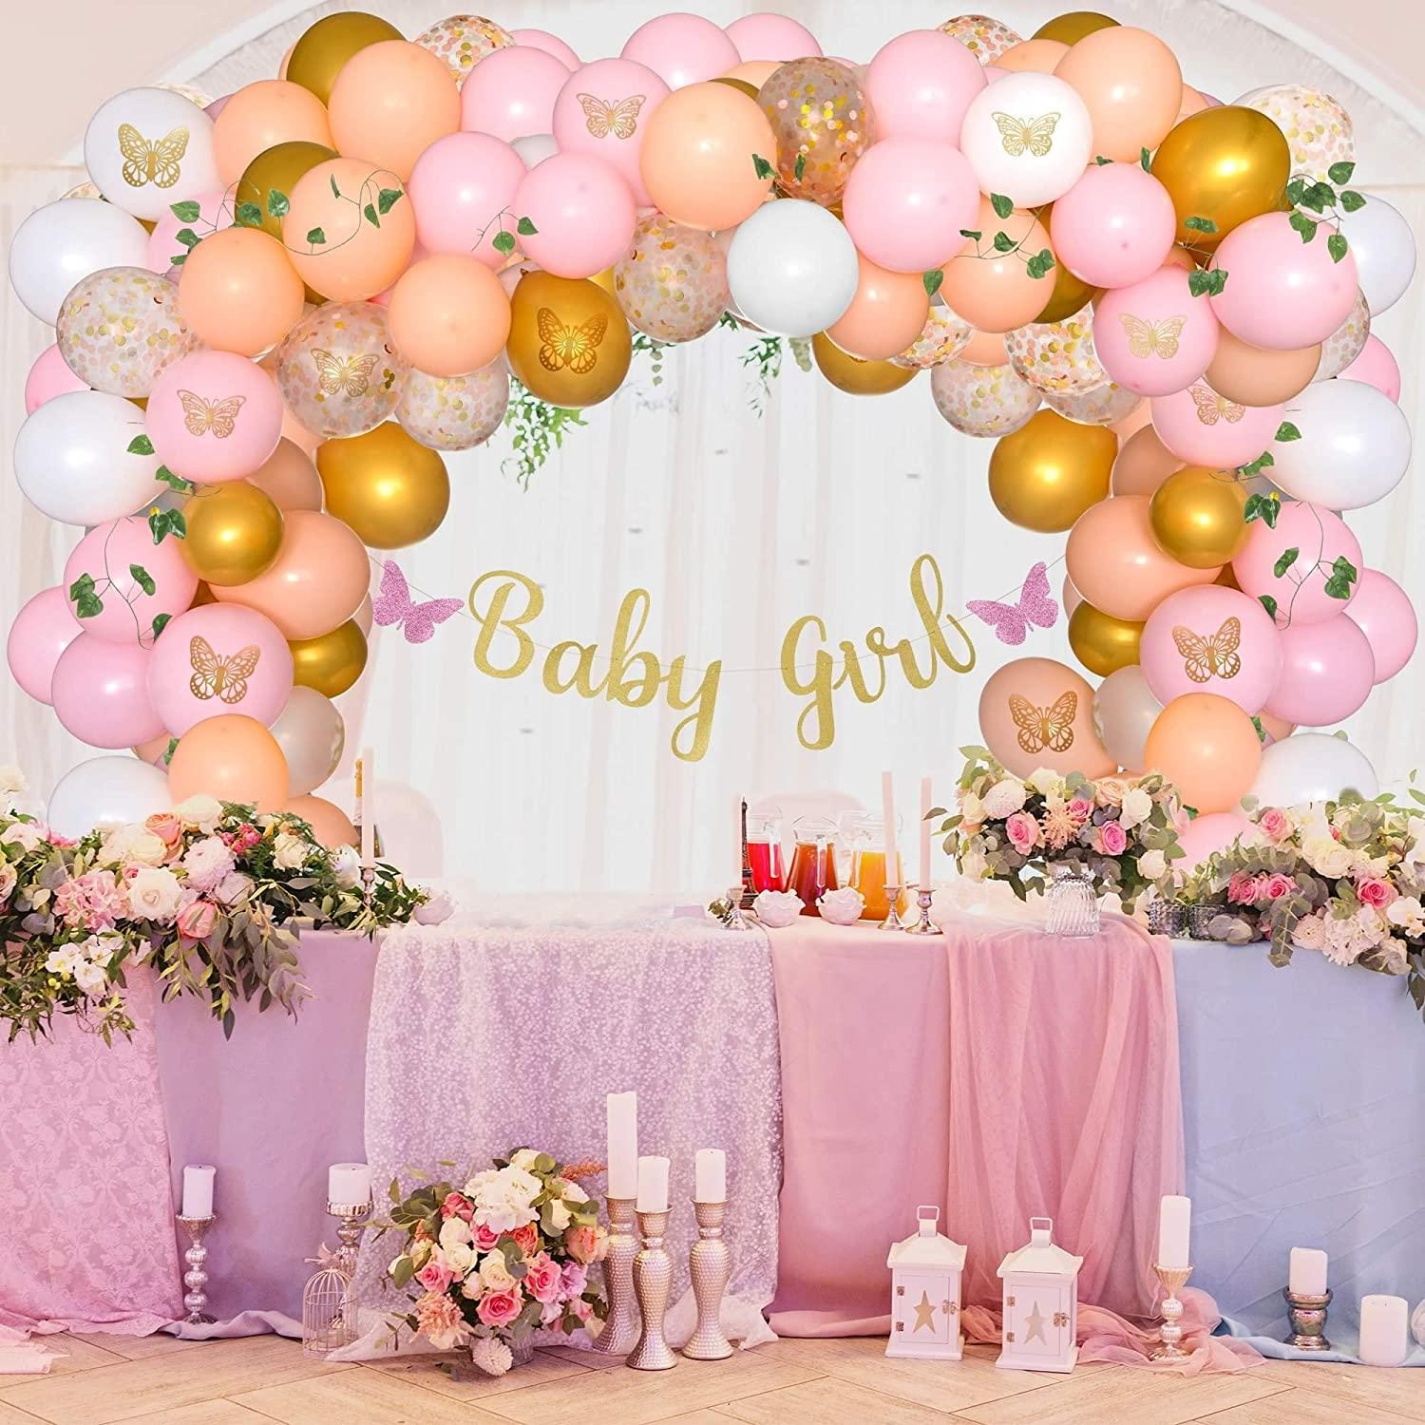 baby shower decorations for girl Bulan 3  Piece Butterfly Garden Baby Shower Decorations For Girl – Pink Balloon  Garland Arch Kit Decor